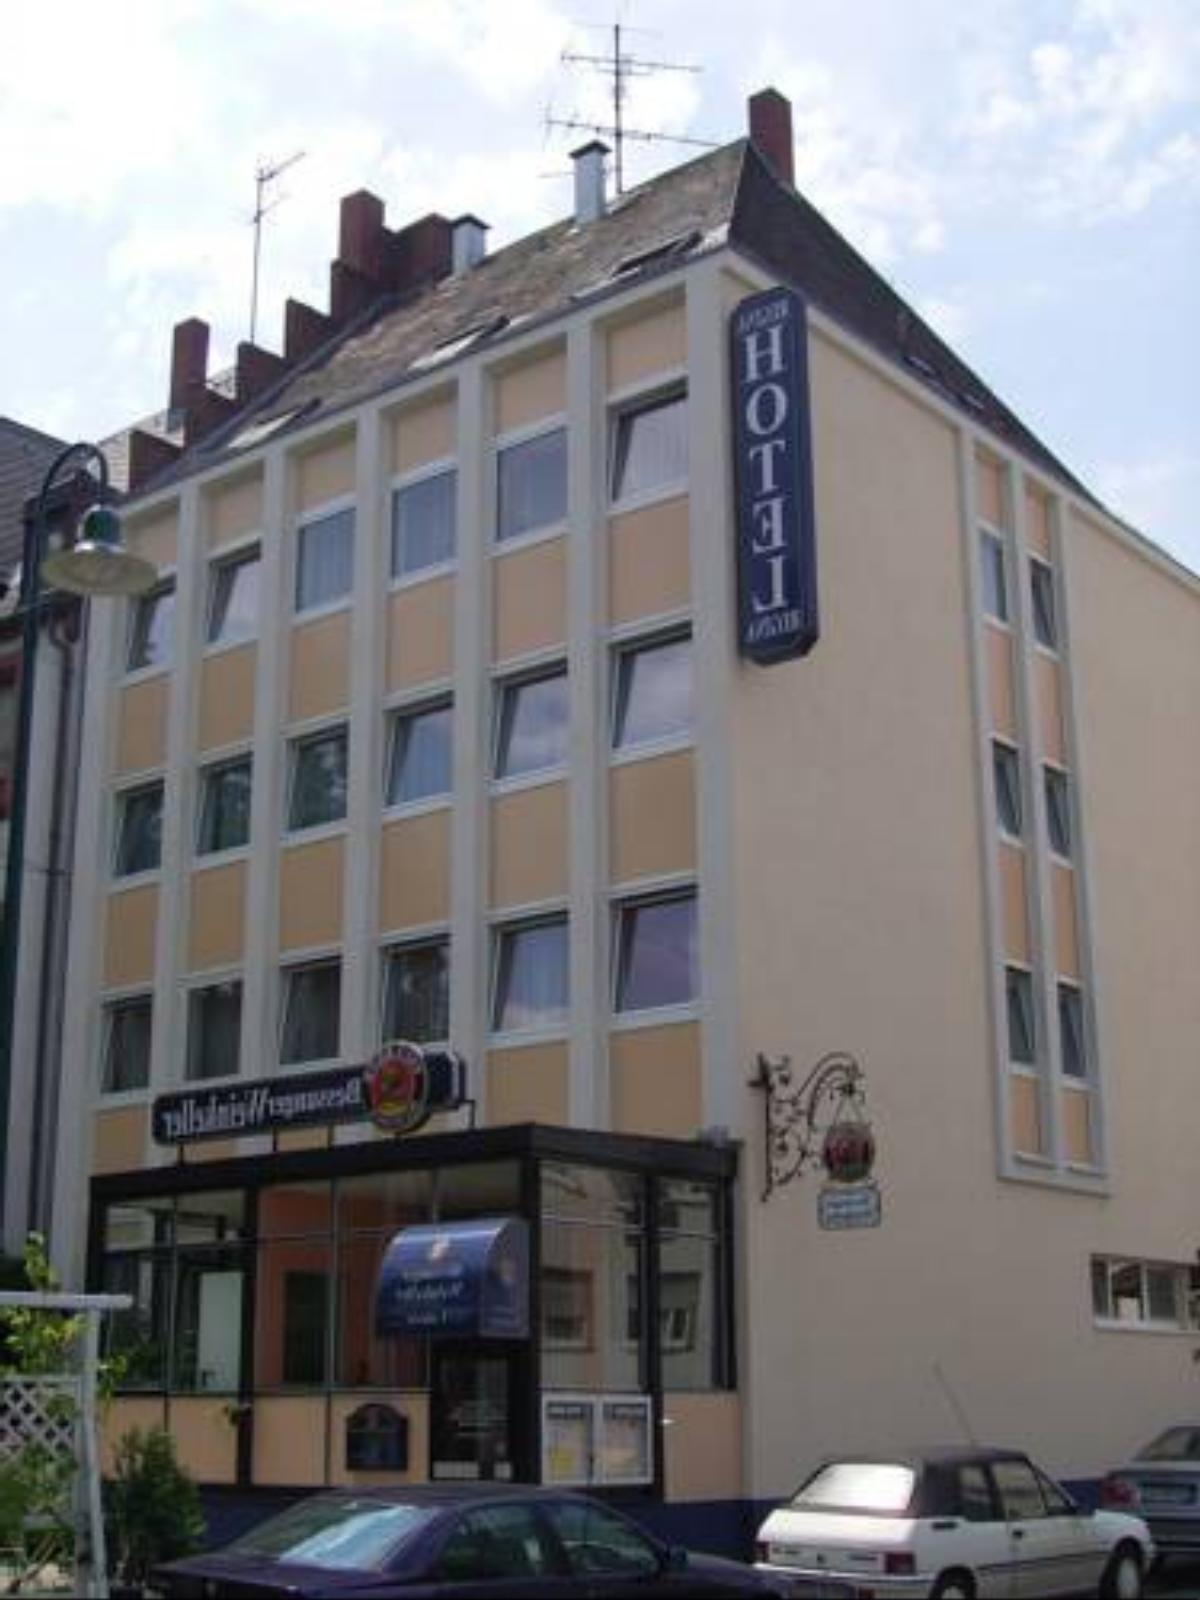 Hotel Regina Hotel Darmstadt Germany